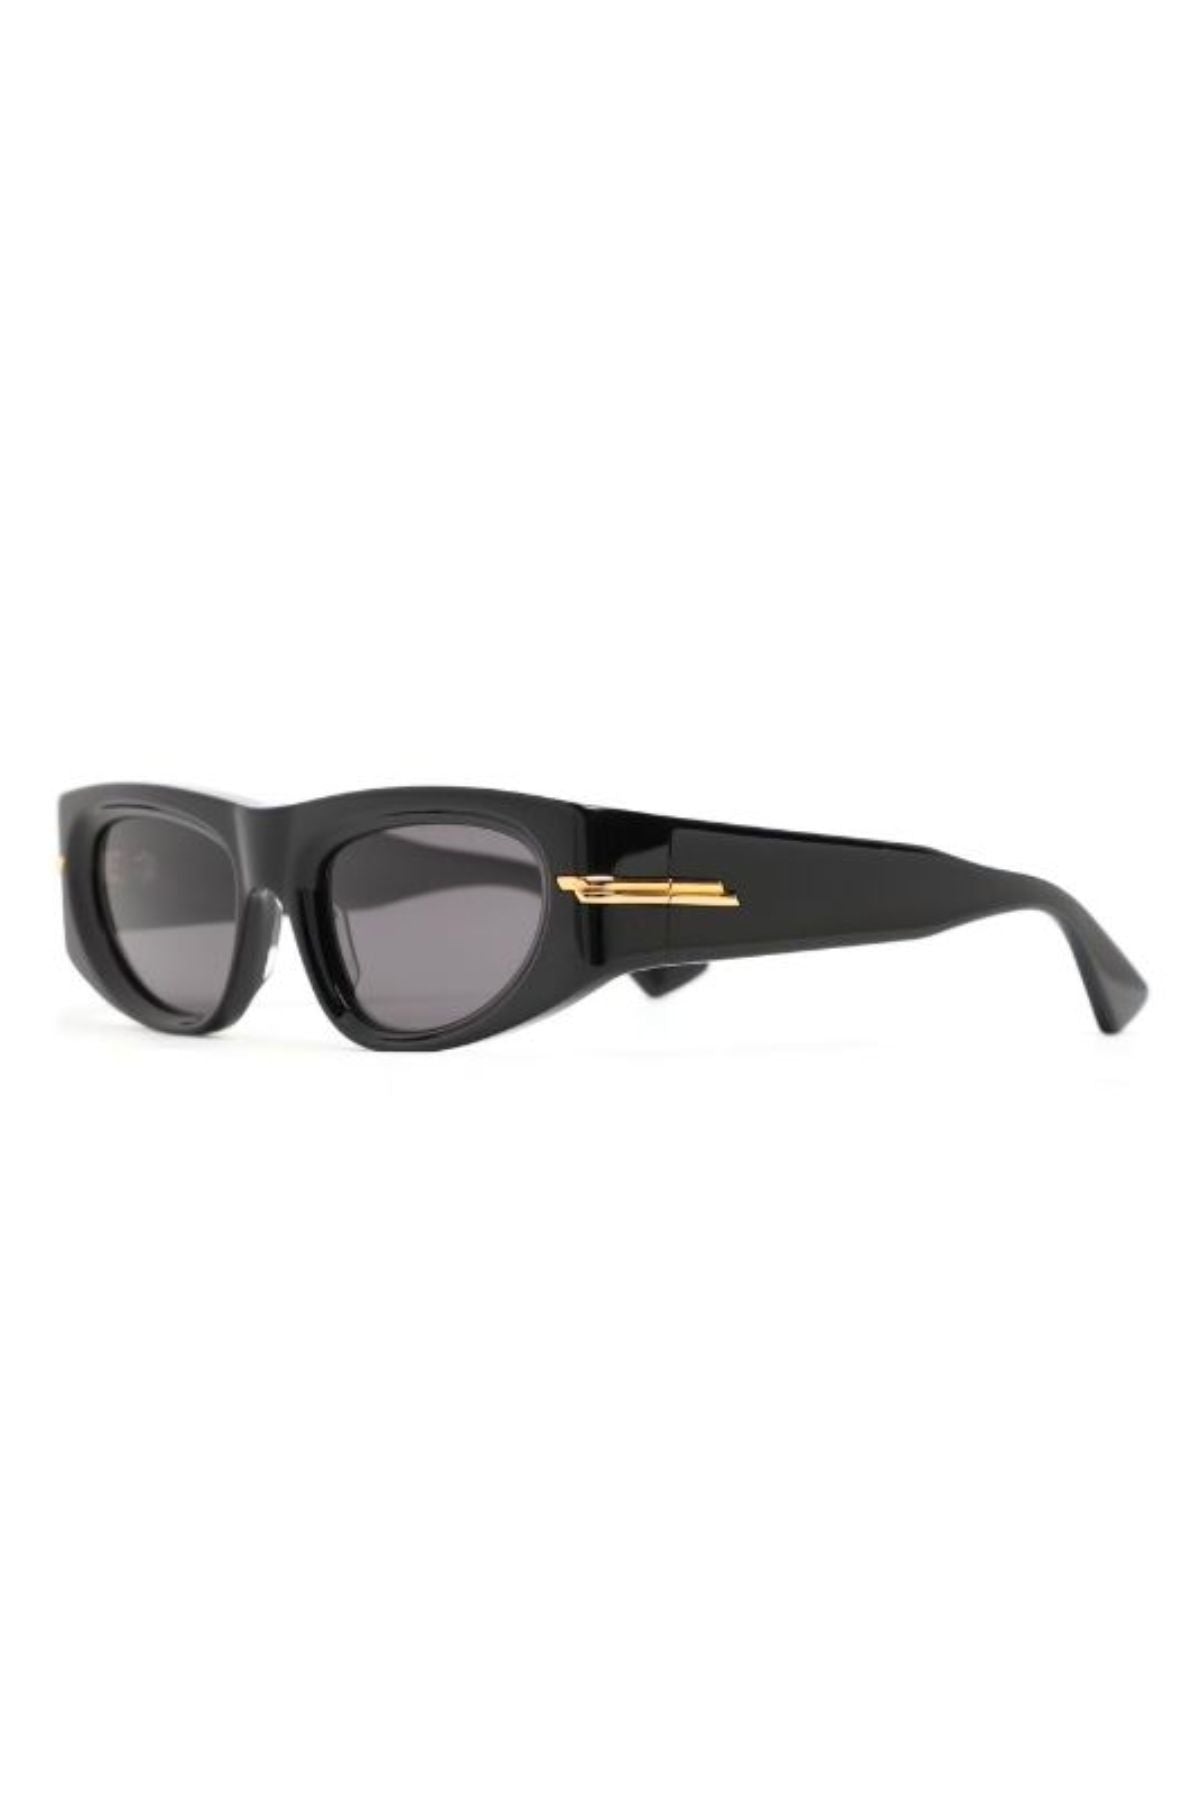 Bottega Veneta Classic Oval Sunglasses - Black